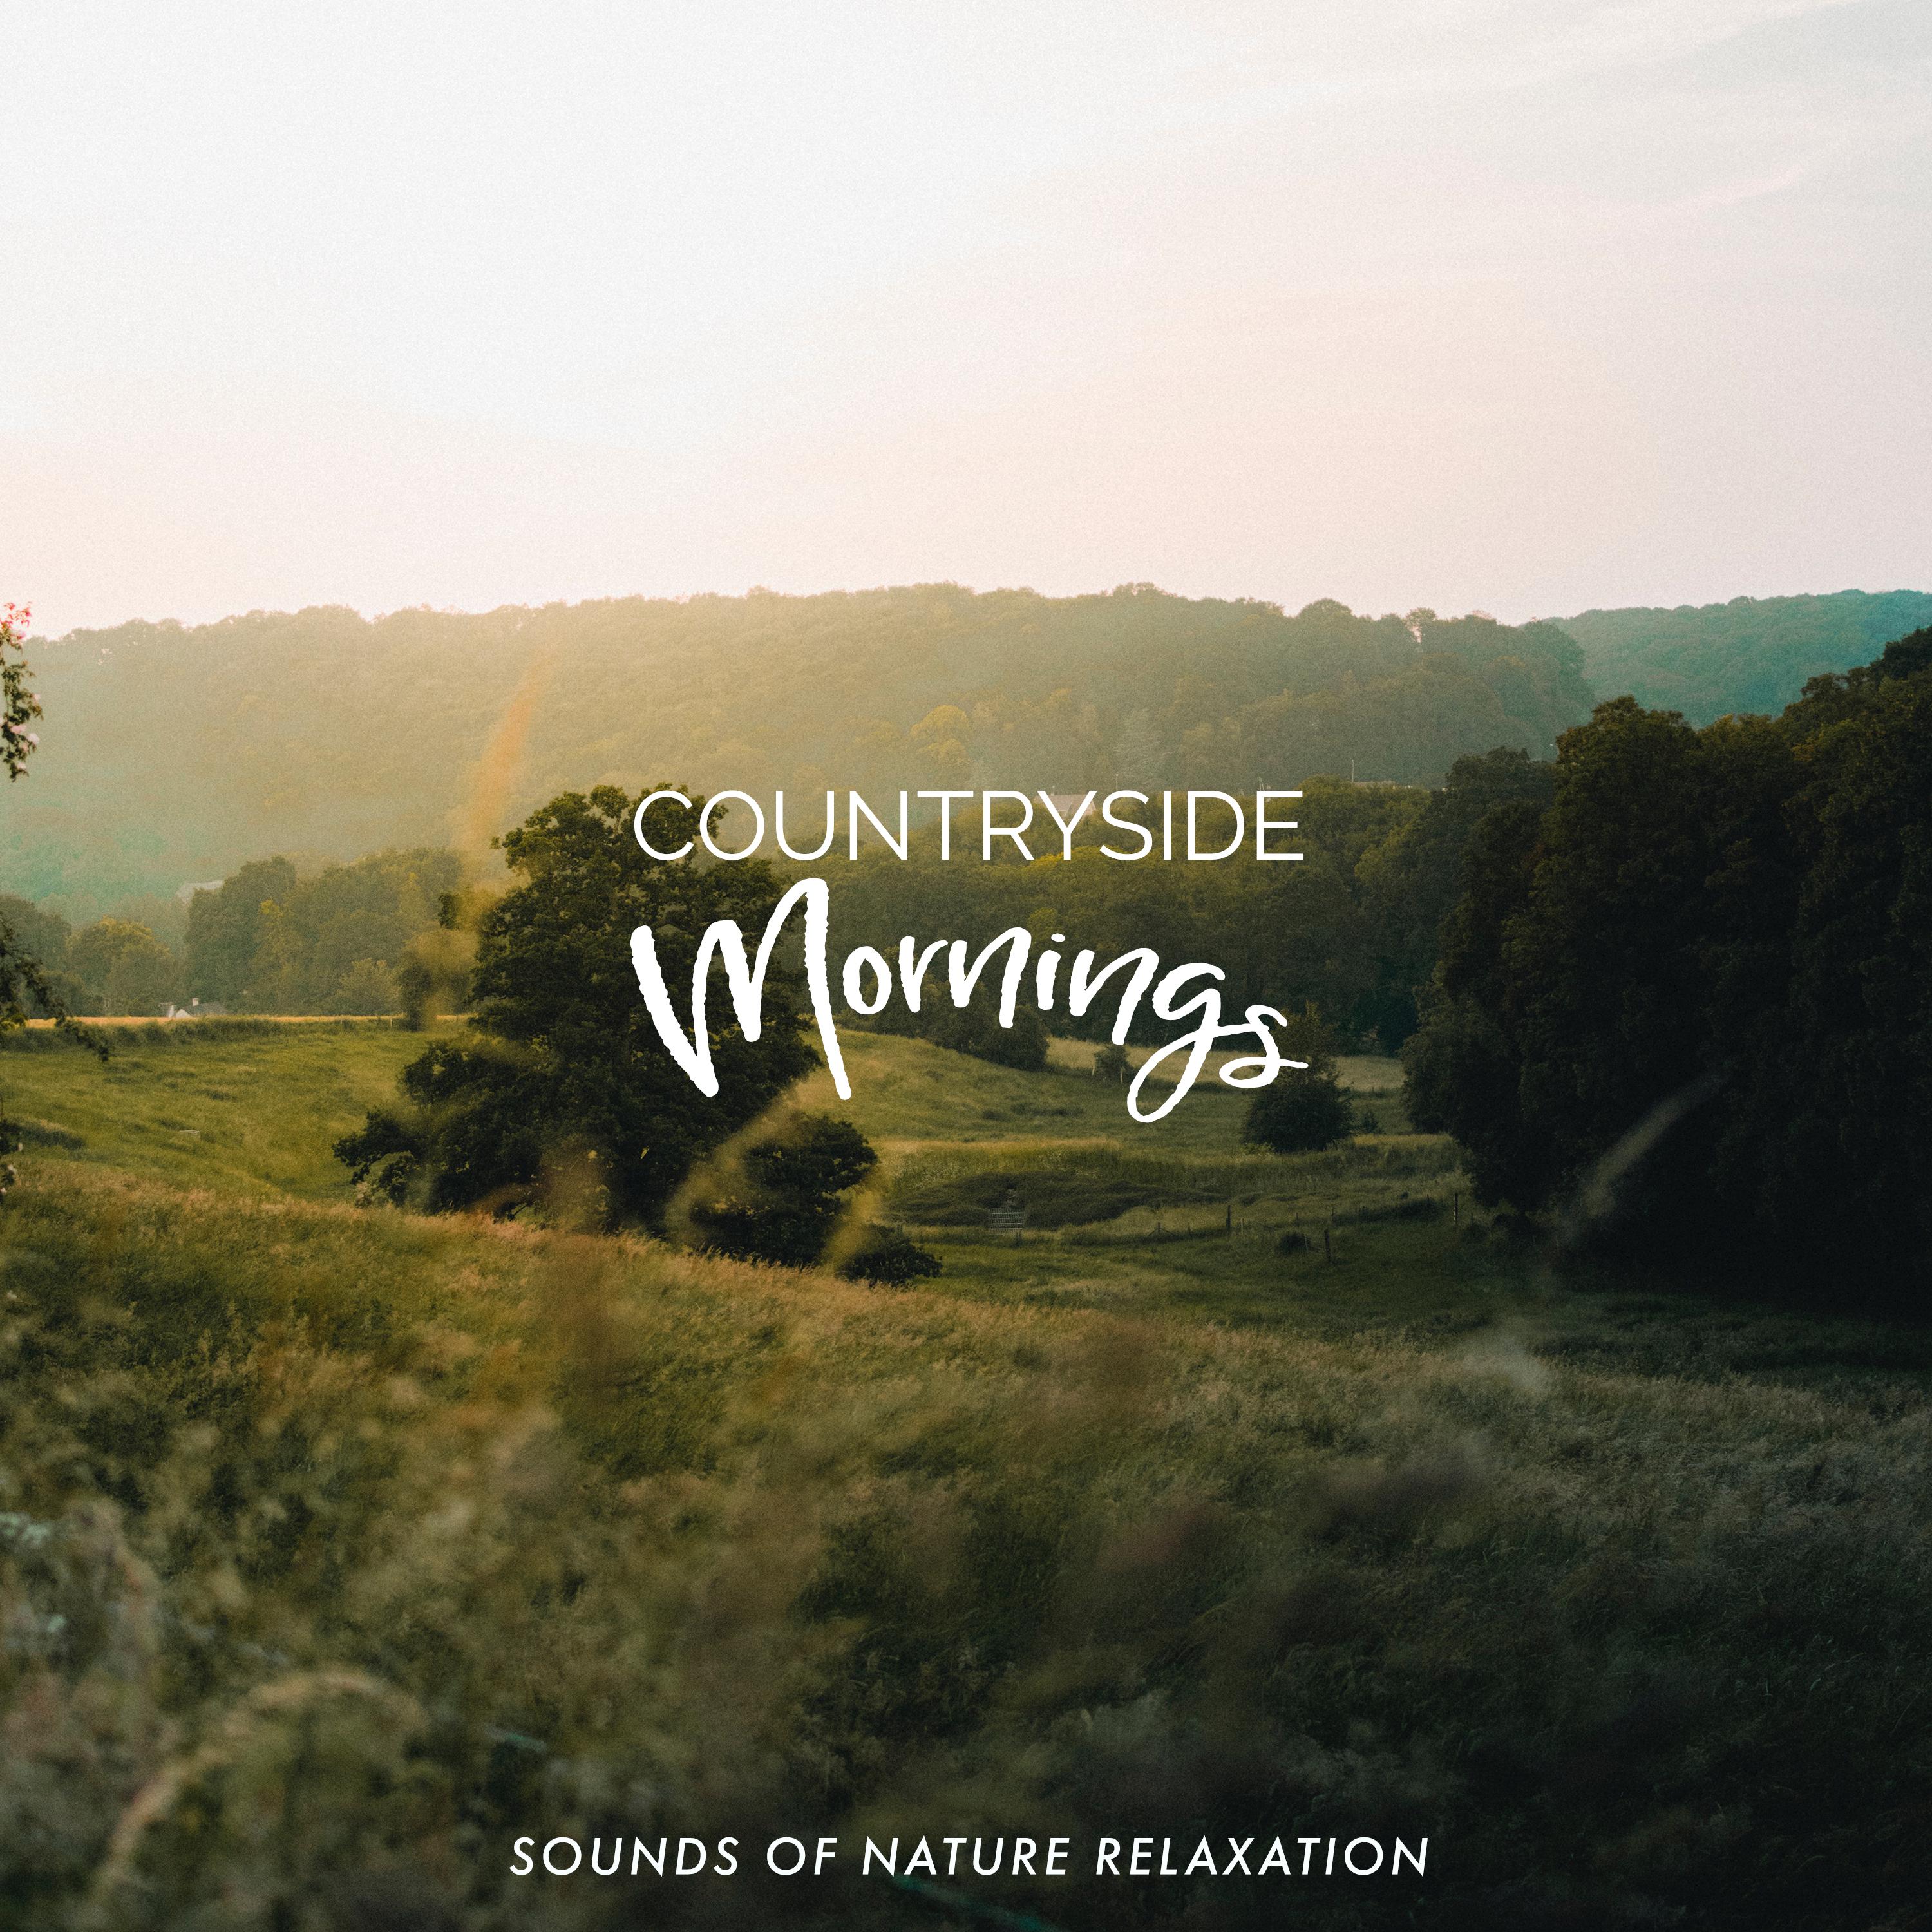 Countryside Mornings